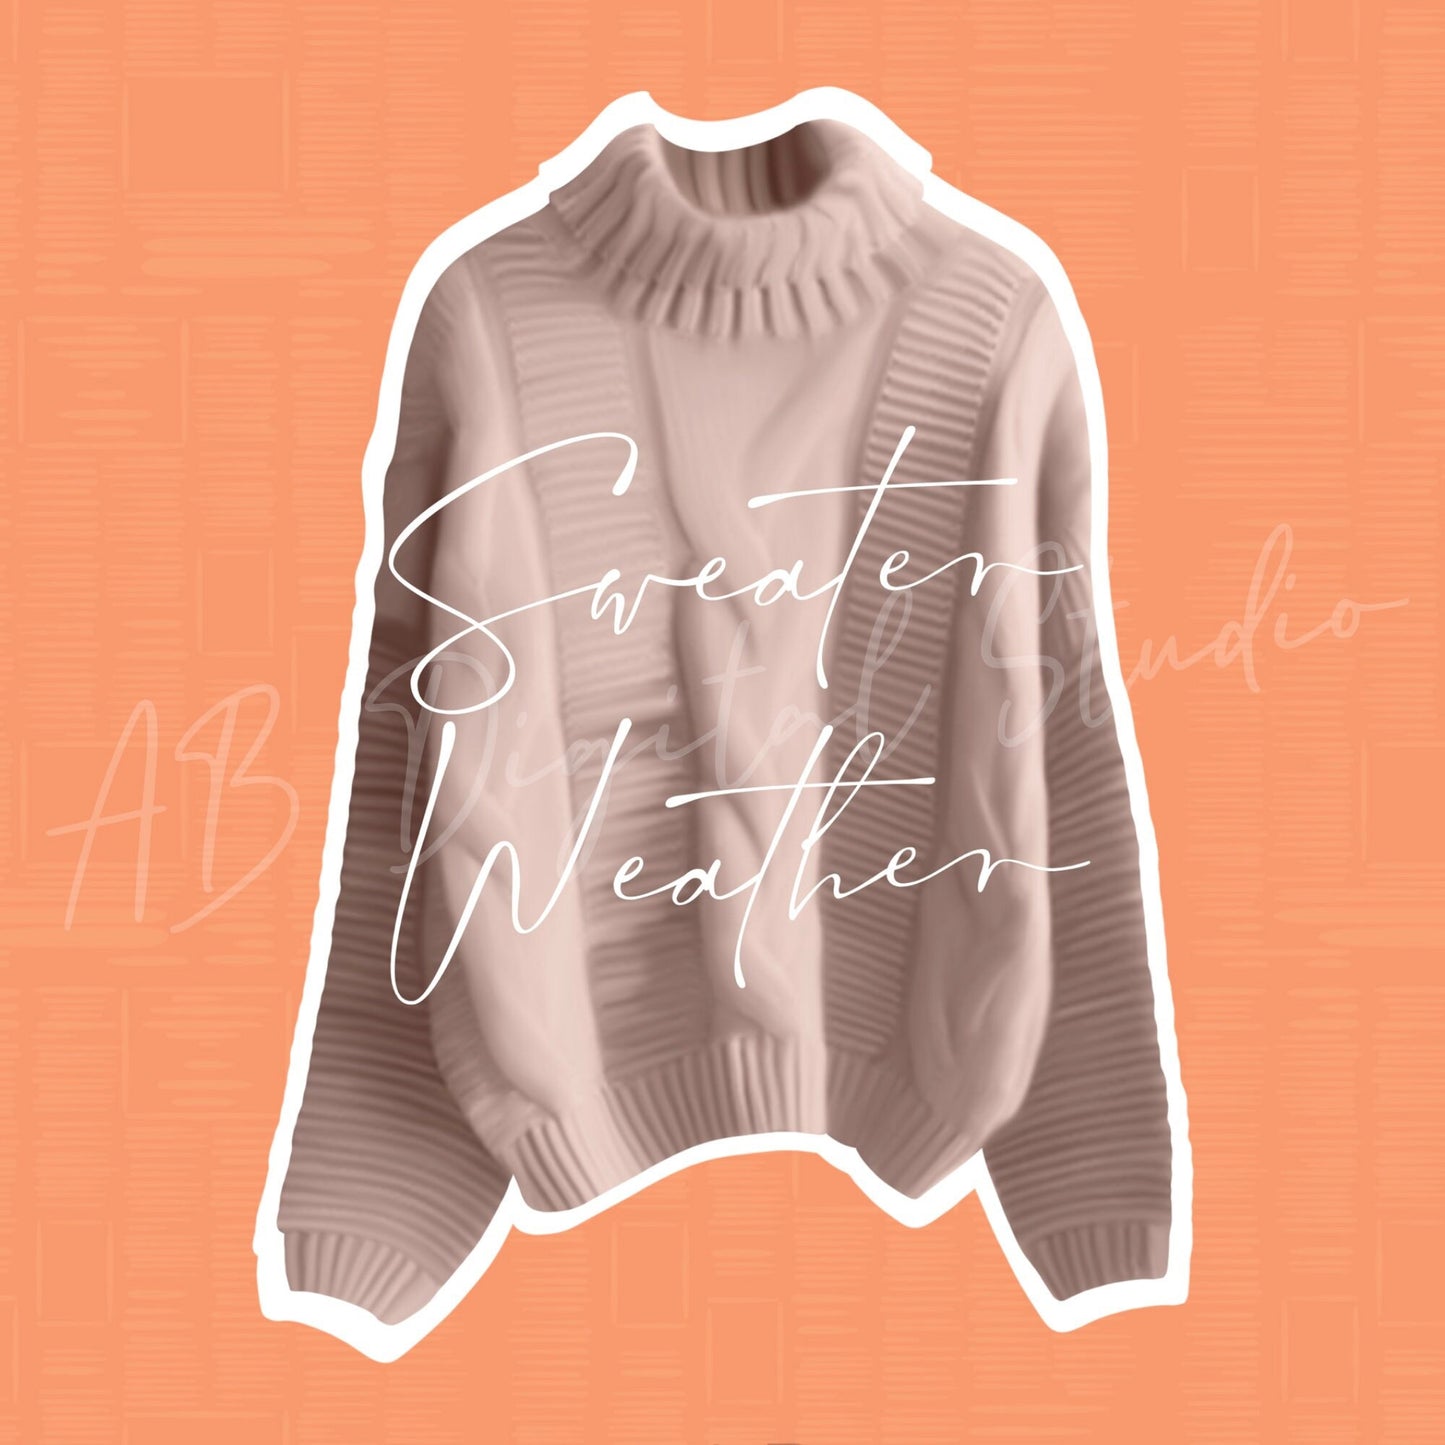 Sweater Weather Mini Sticker Pack